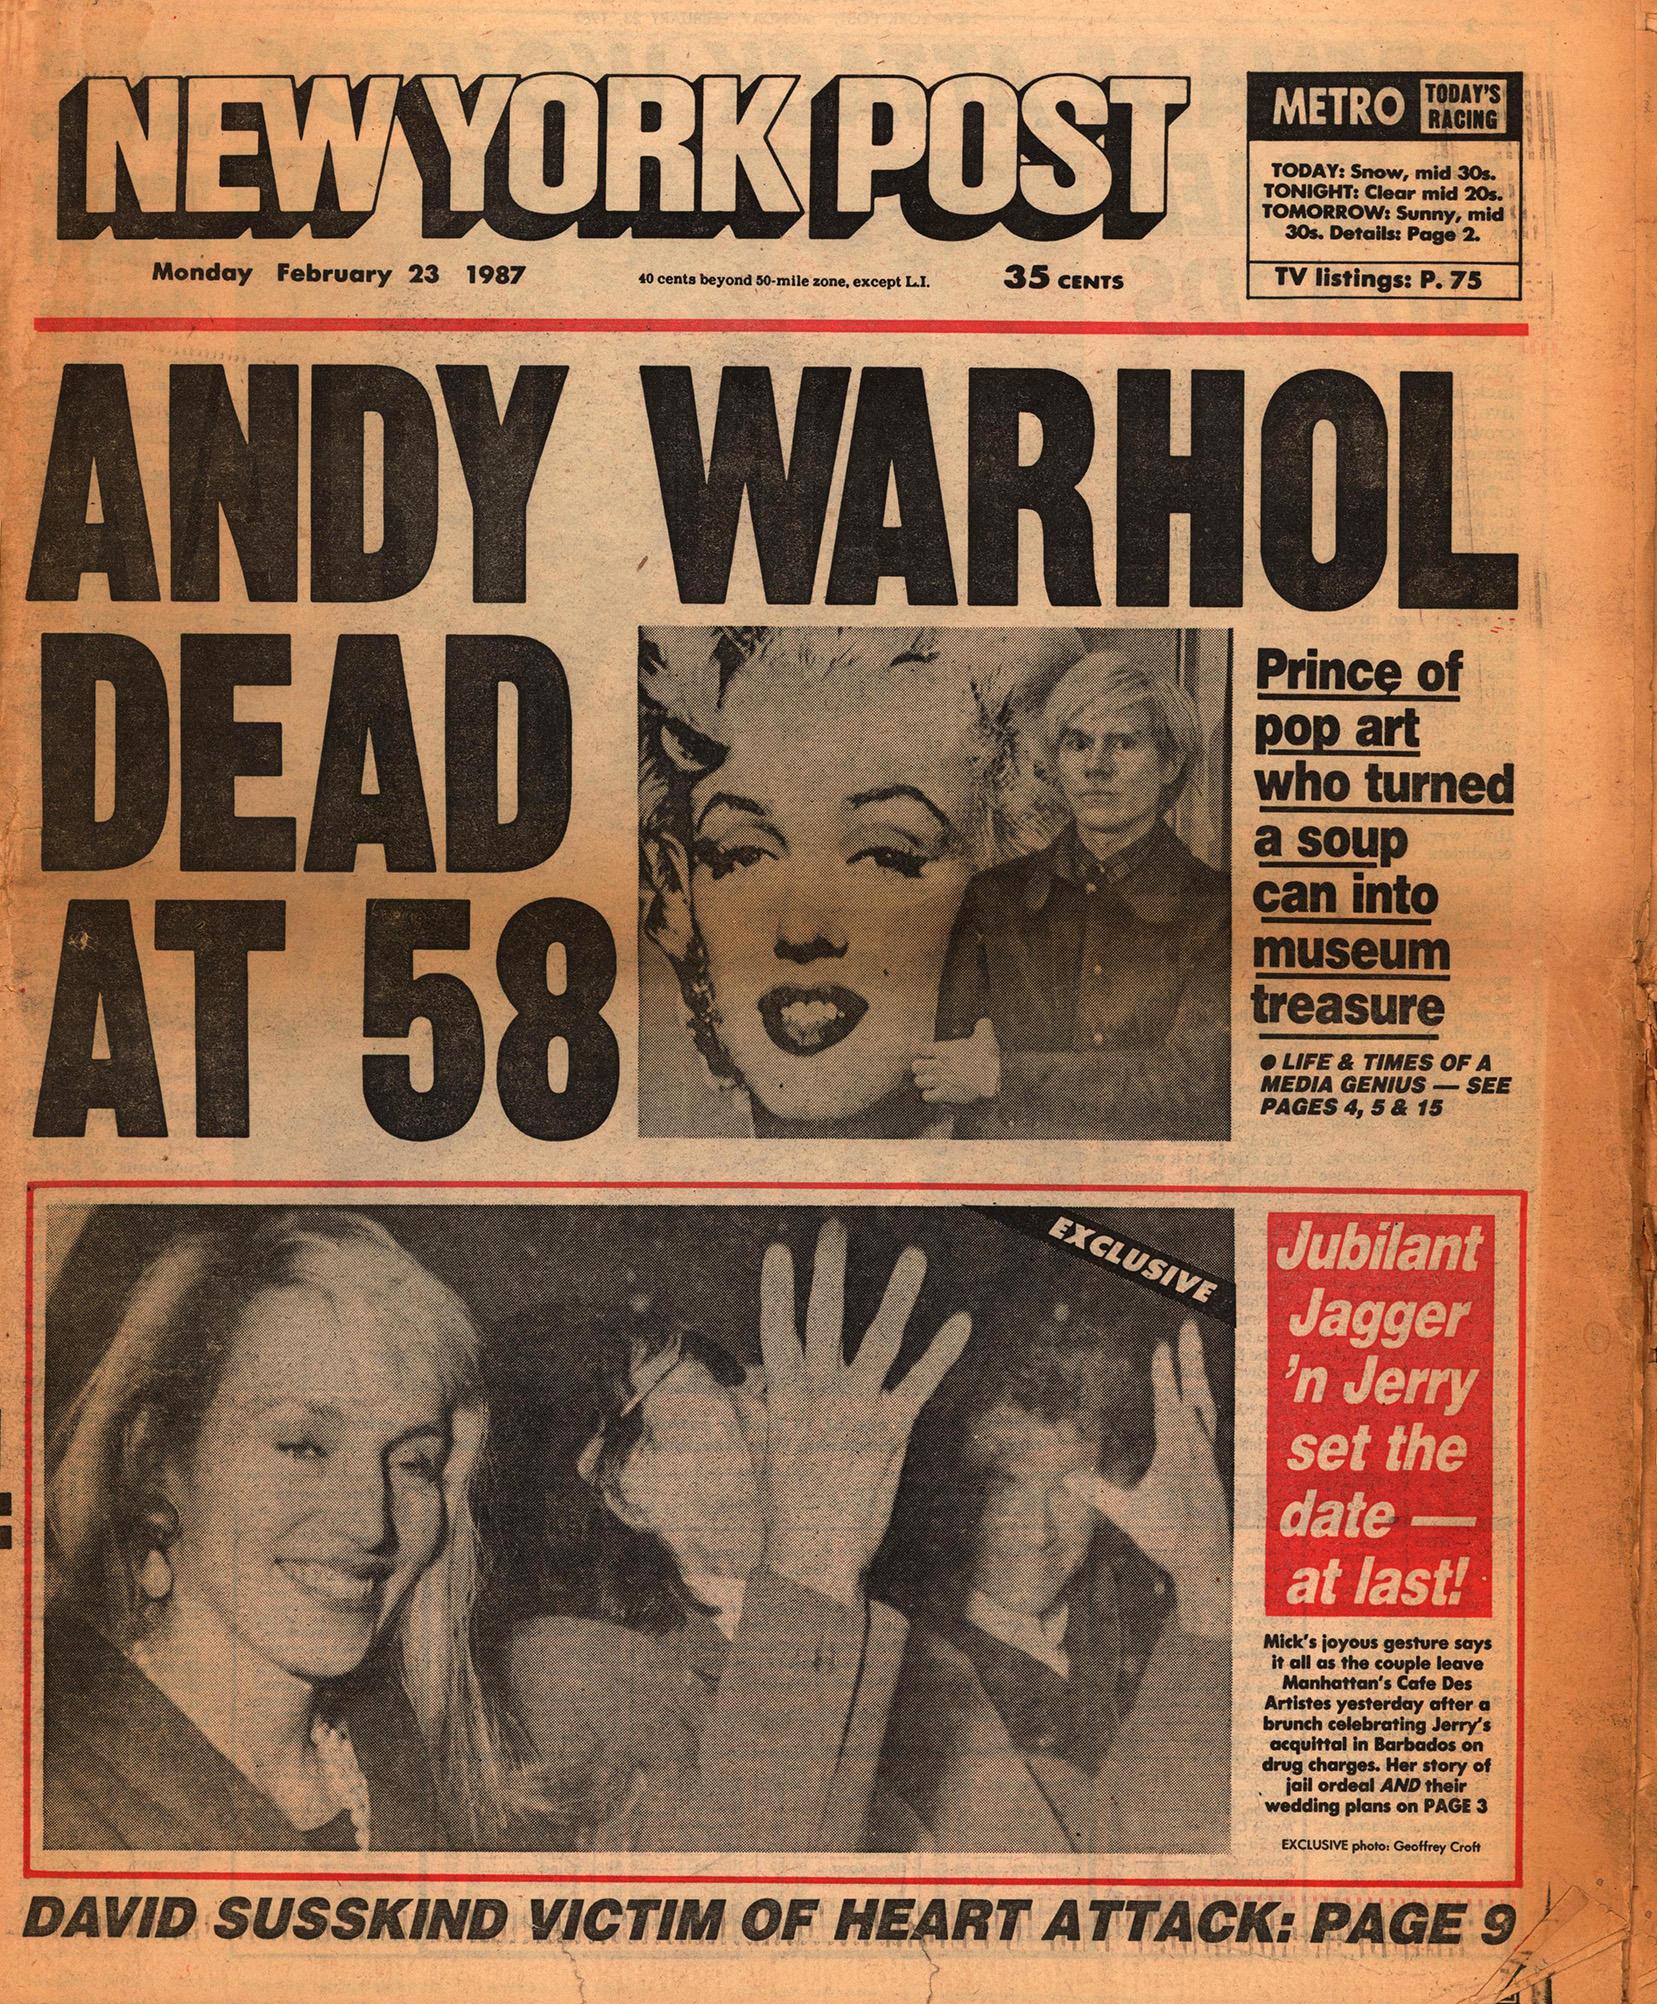 Andy Warhol meurt ! Ensemble de quatre journaux de New York de 1987 annonçant la mort d'Andy Warhol